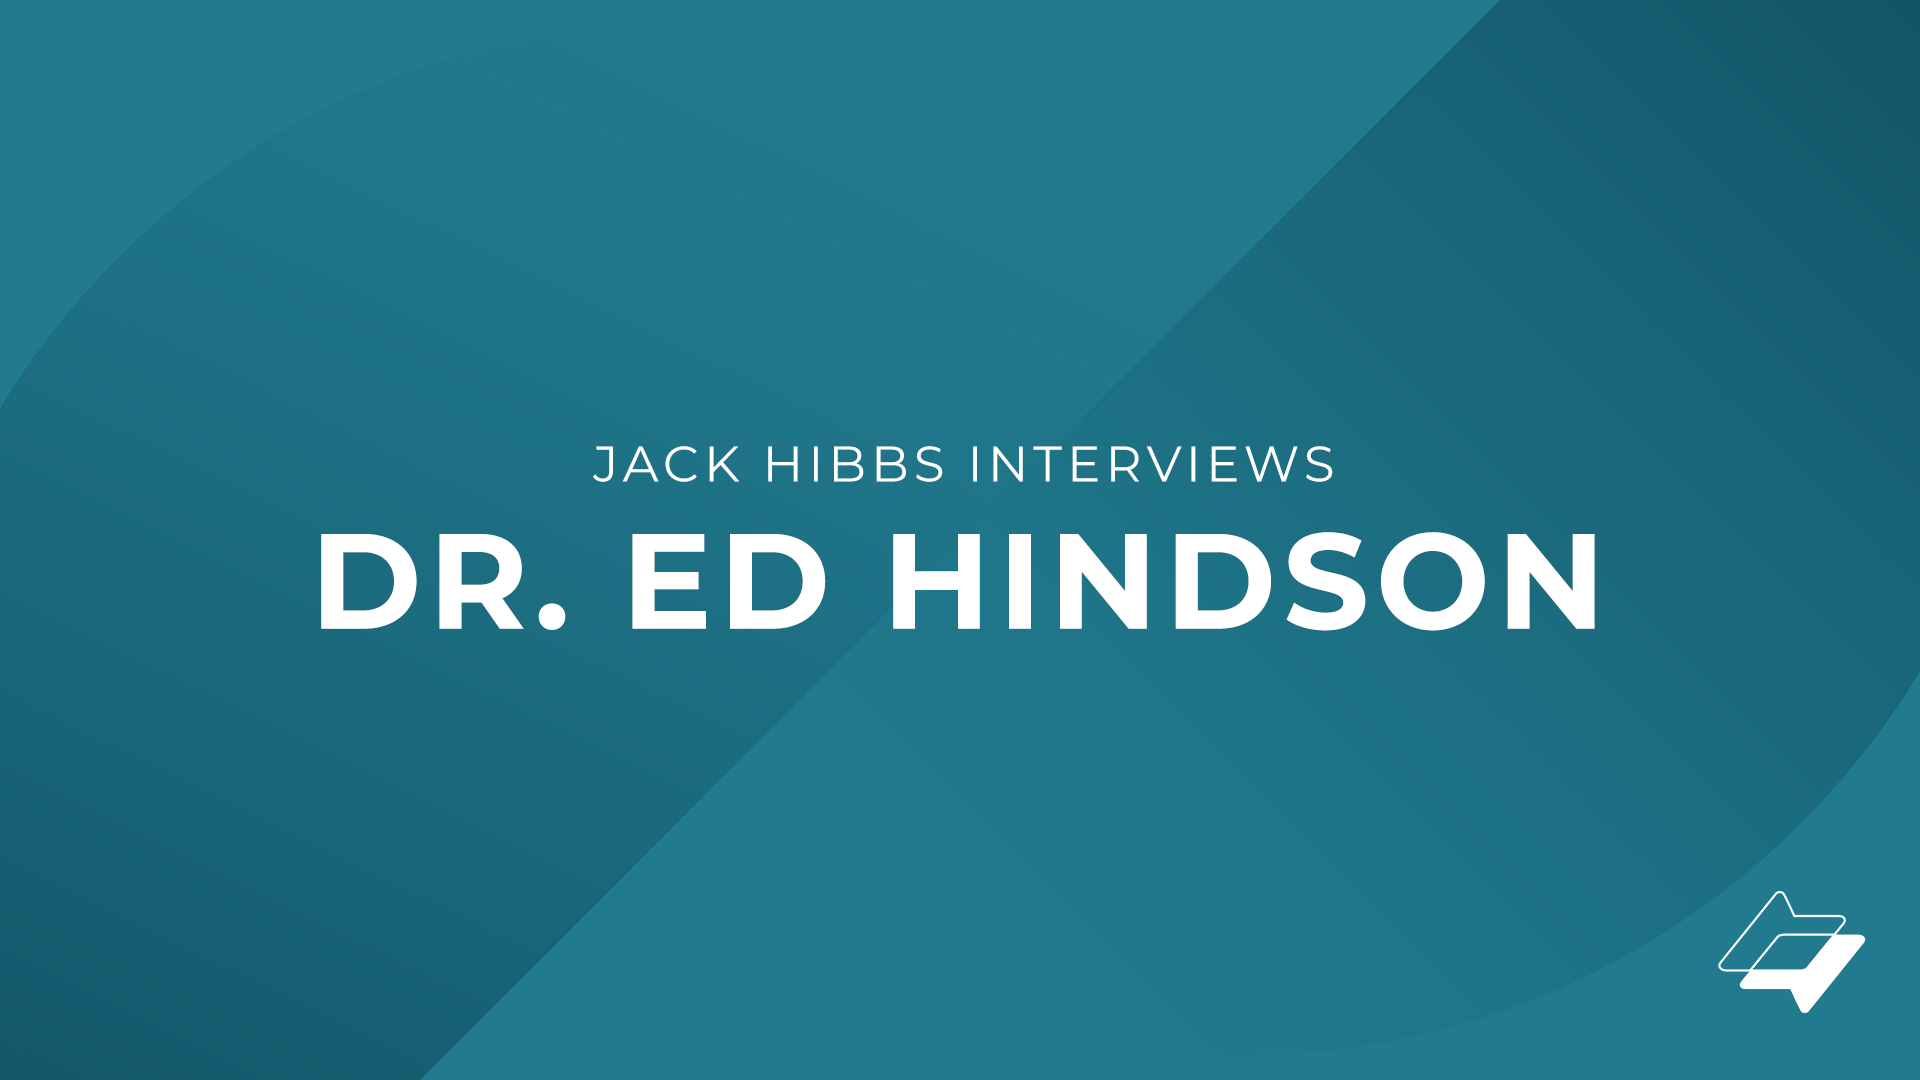 Jack Hibbs interviews Dr. Ed Hinsdon